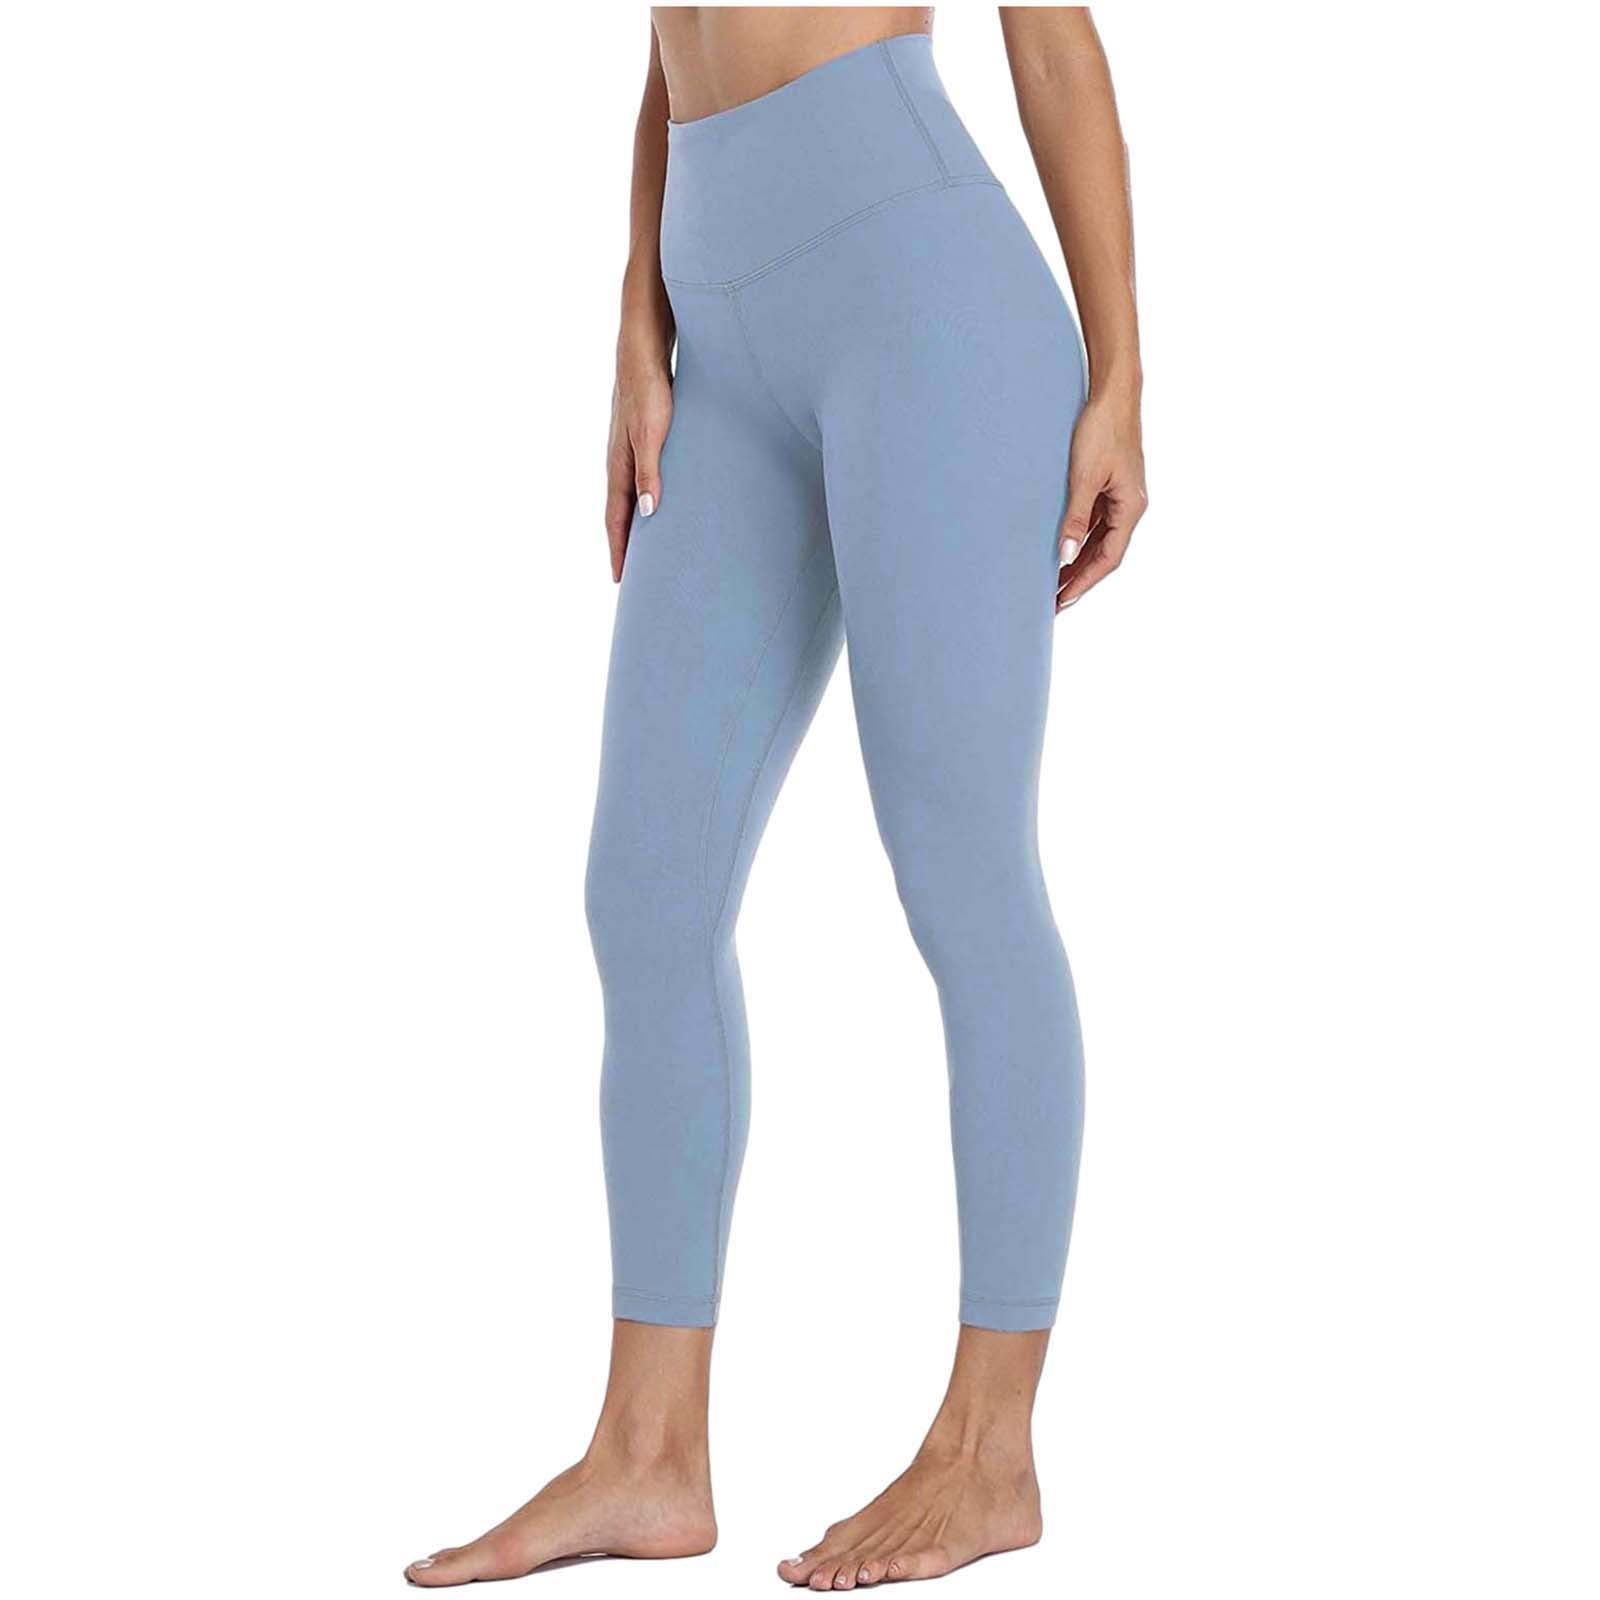 KaLI_store Yoga Pants with Pockets for Women Women's Wide Leg Yoga